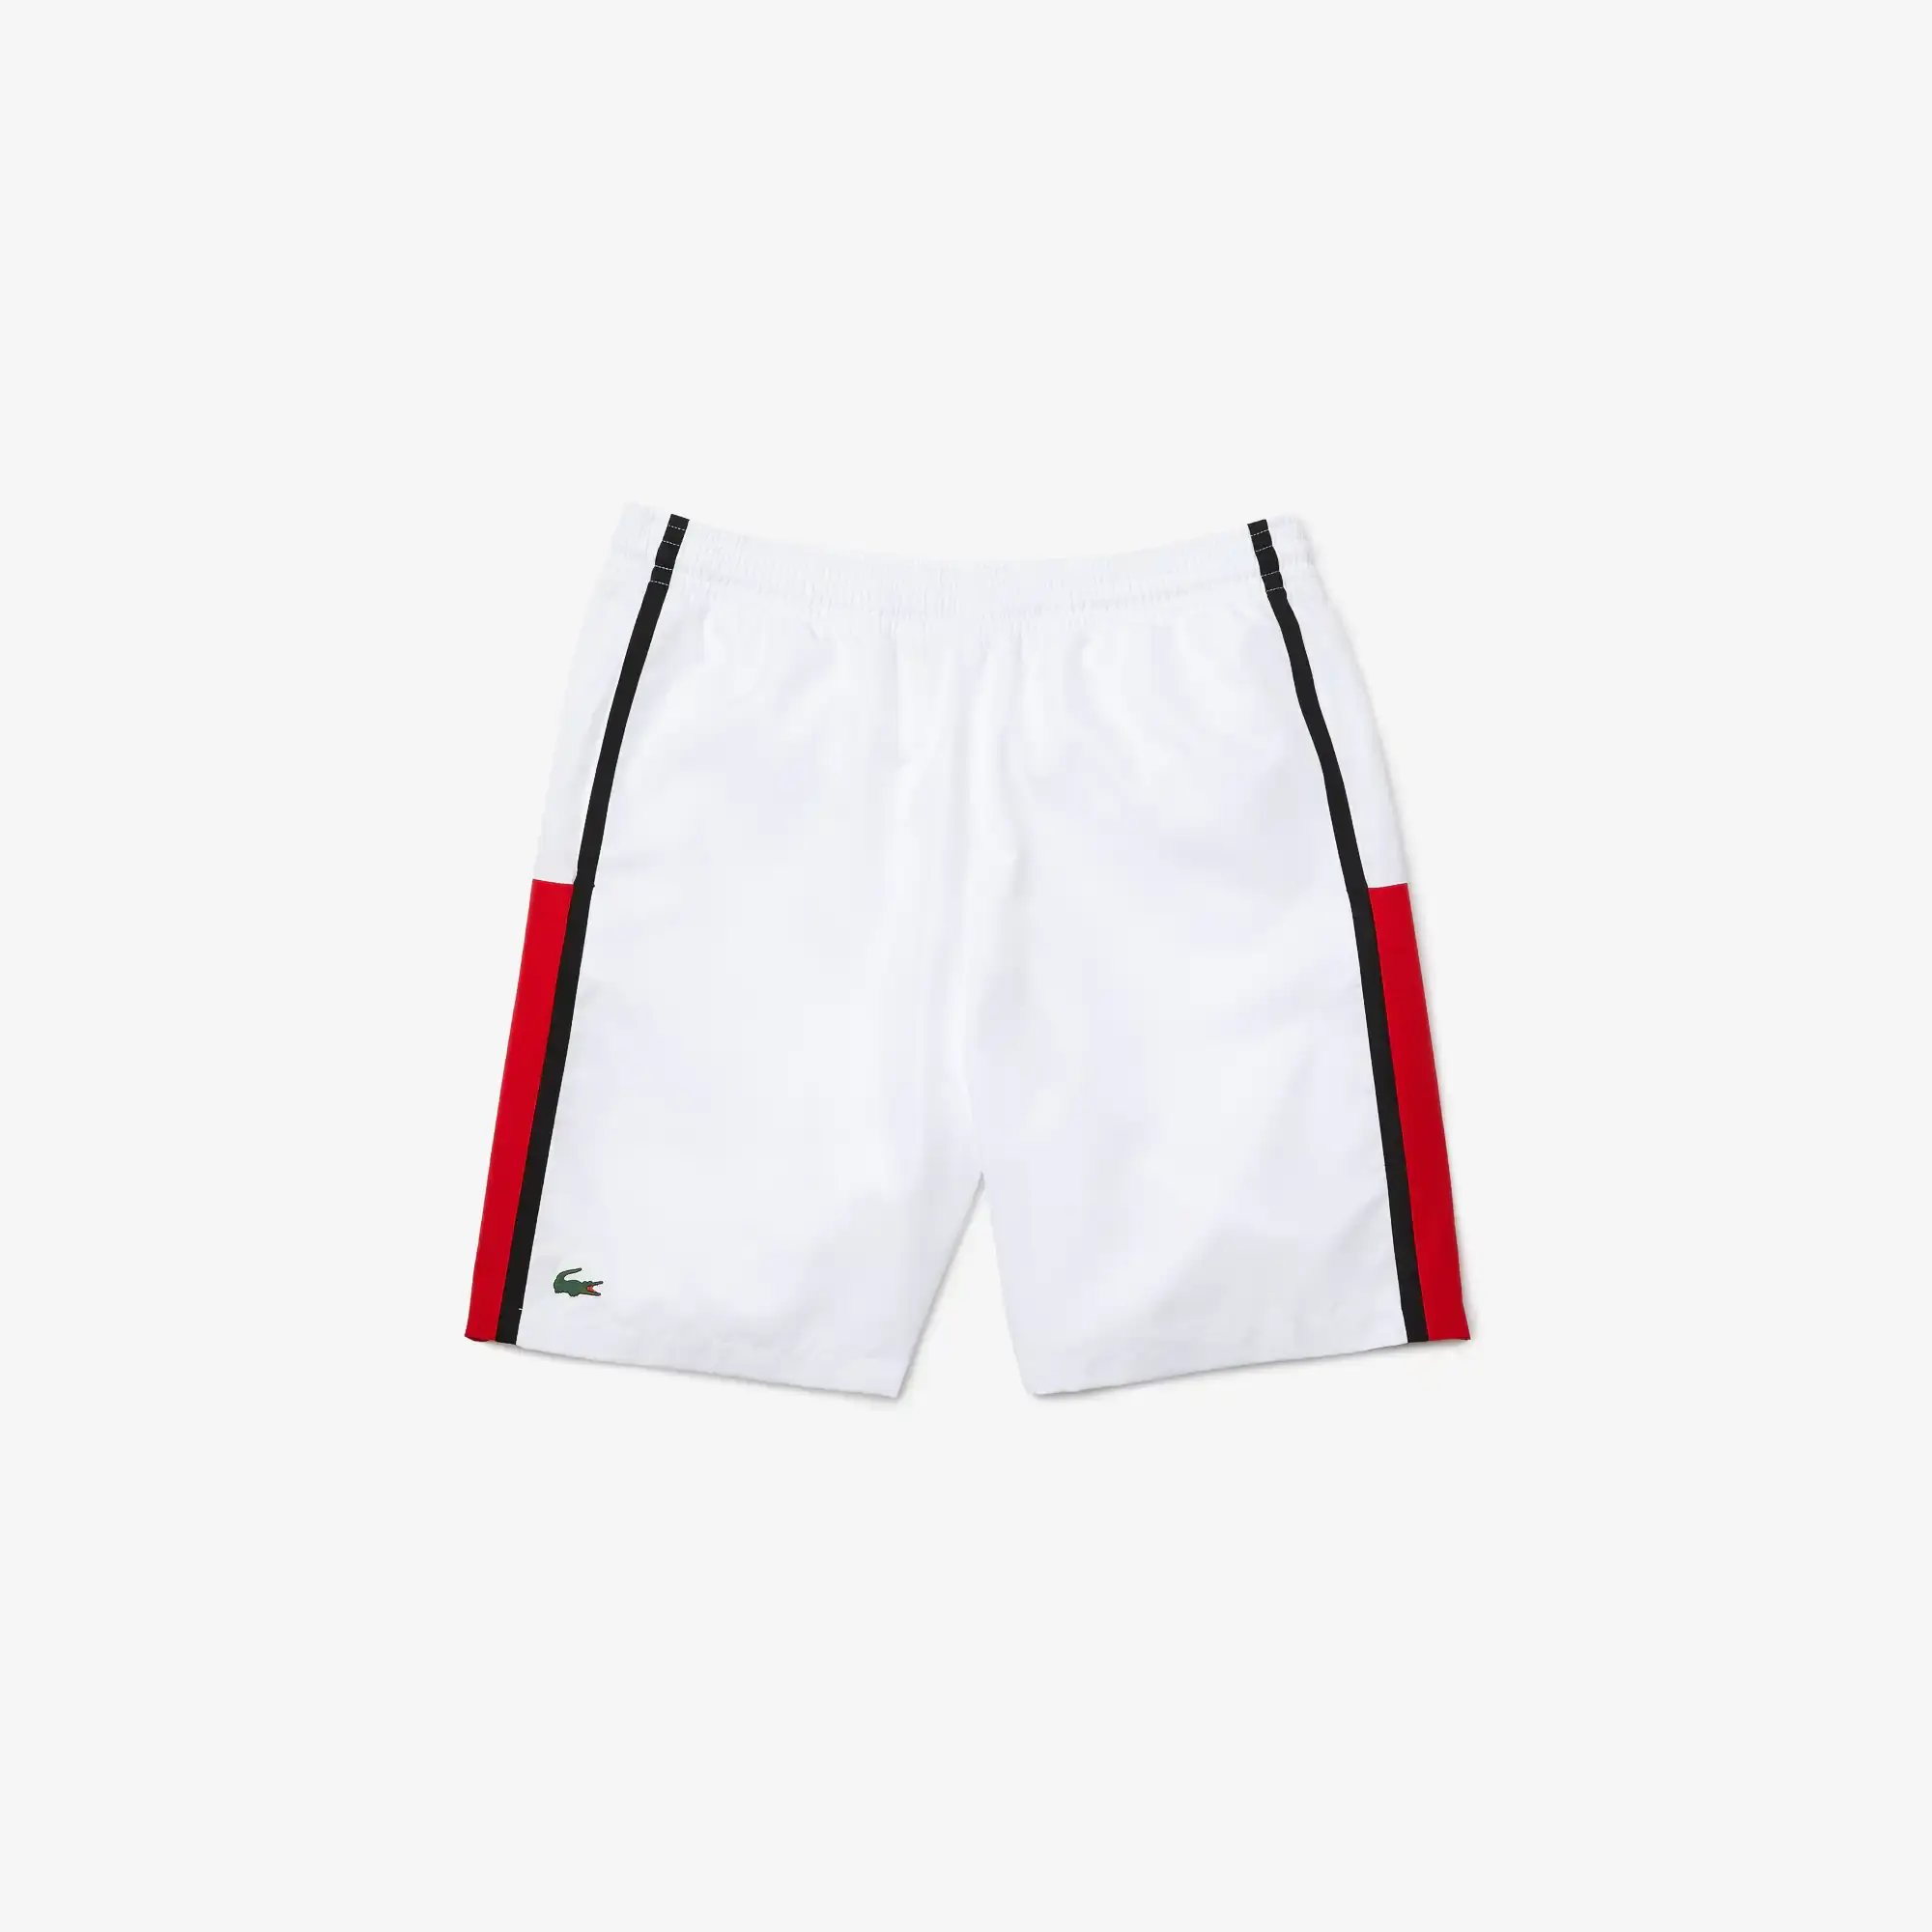 Lacoste Men's SPORT Colorblock Panels Lightweight Shorts. 2